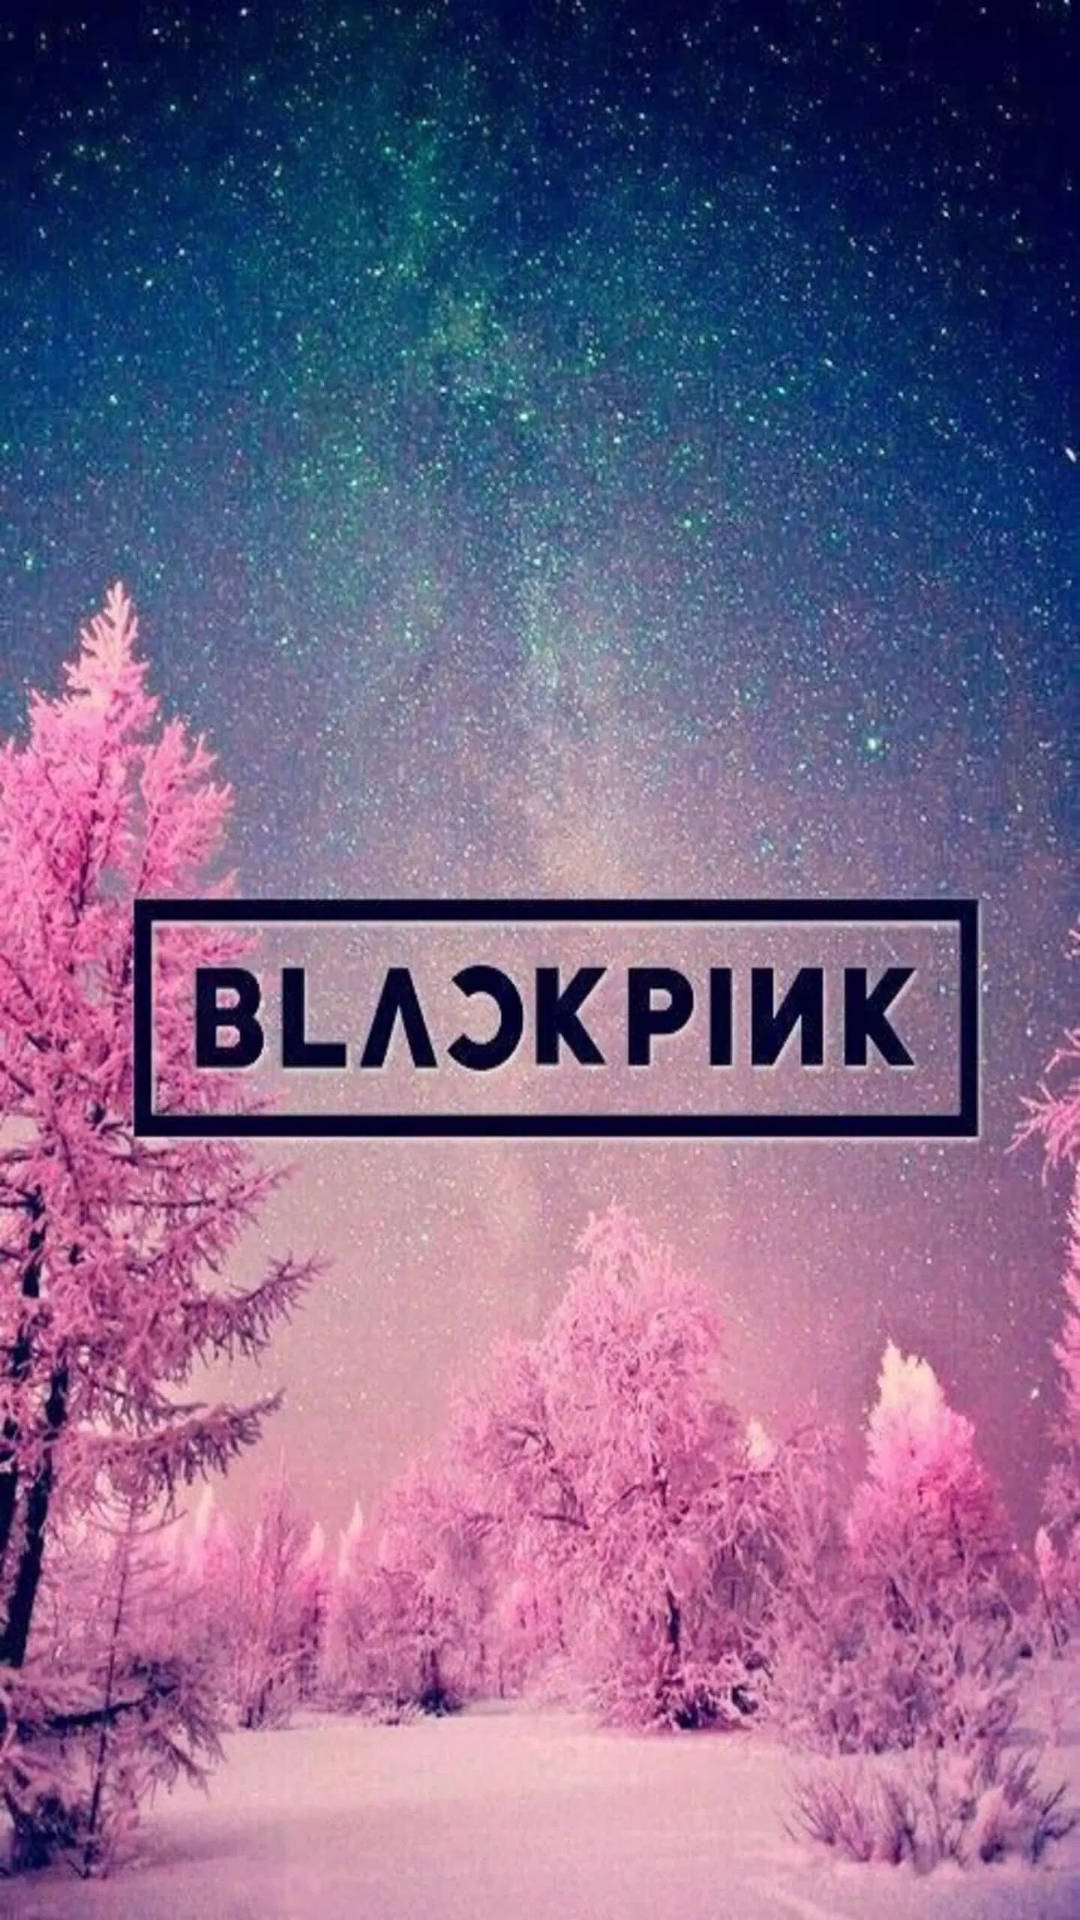 Blackpink Logo Over Pink Snowy Forest